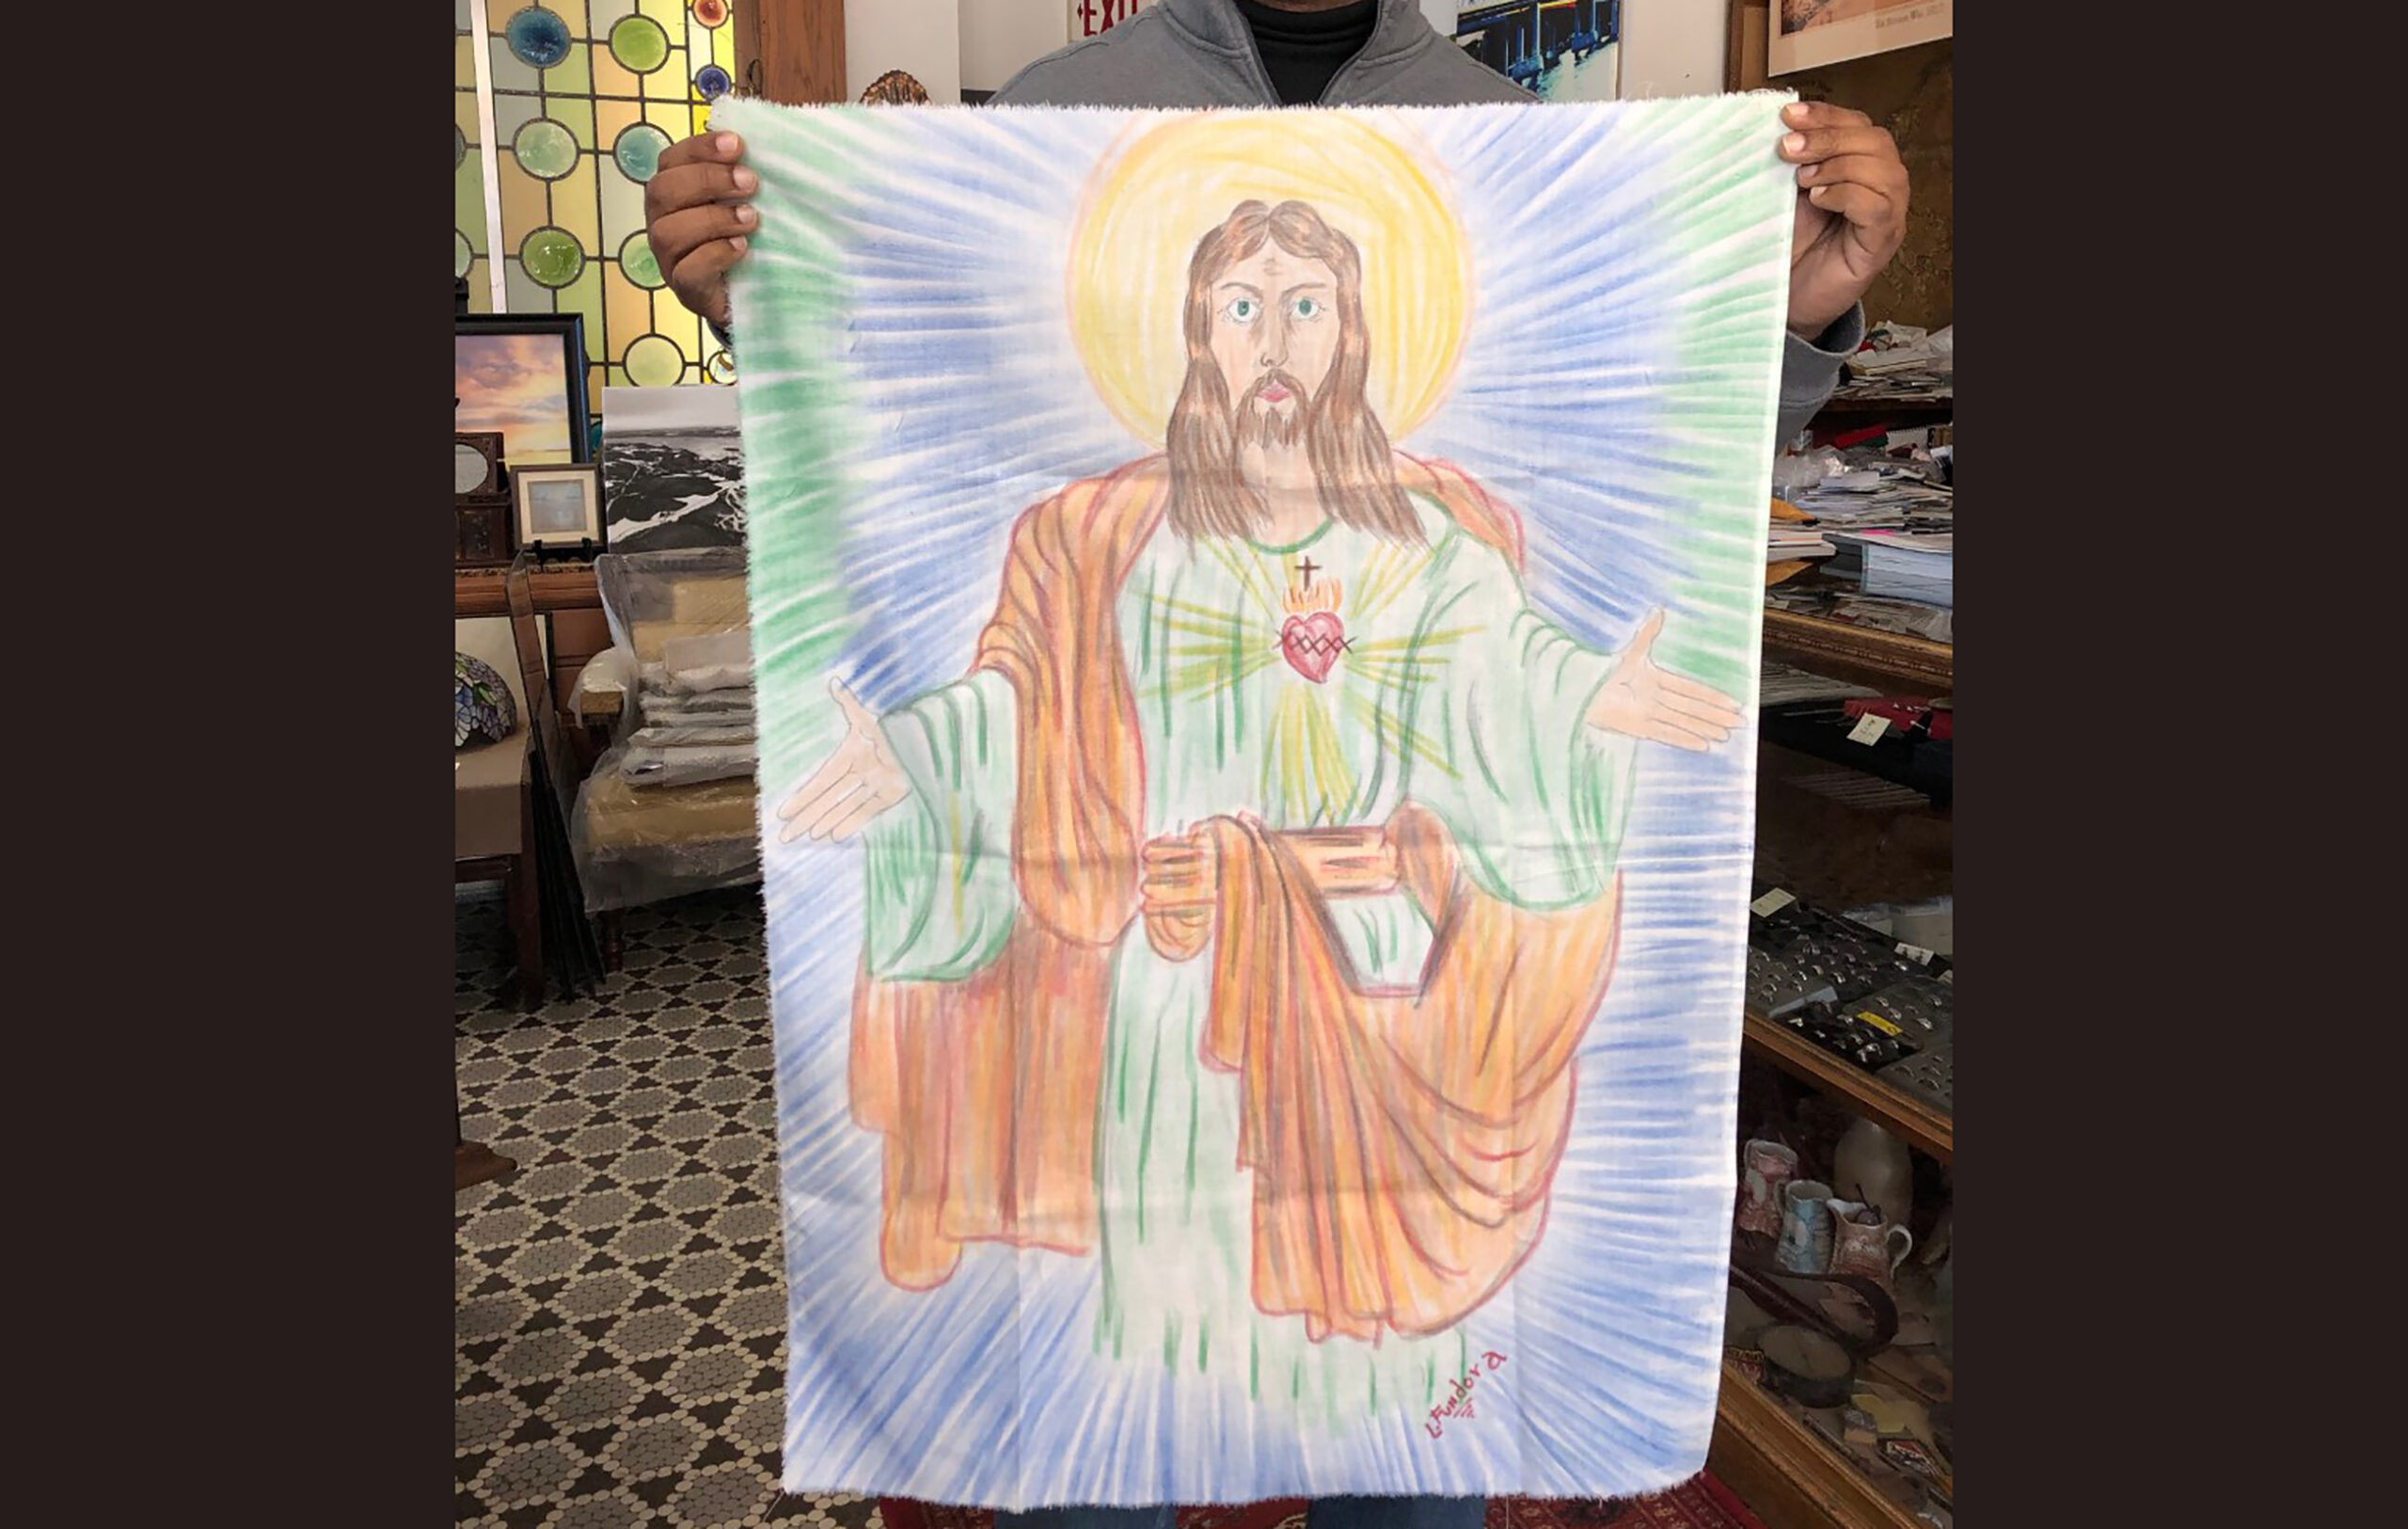 Armando Rodriguez holds art created on a bedsheet of Jesus Christ.